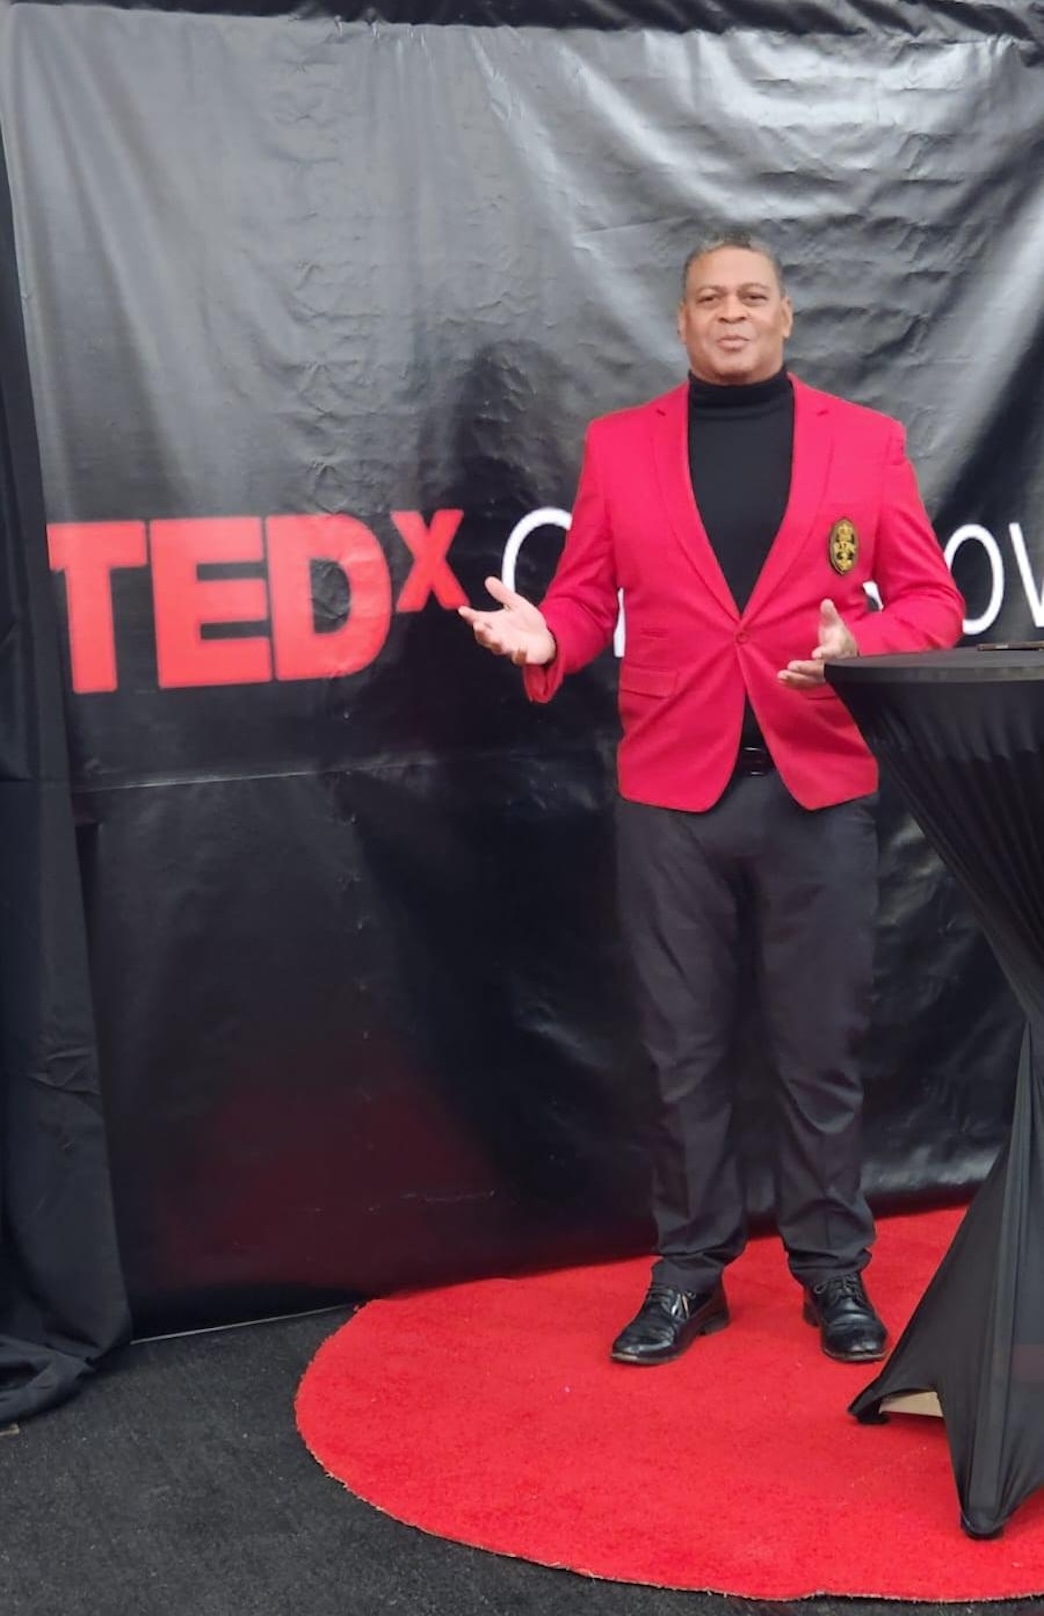 Robert Scott’s TEDx talk on Organ Donation sparks International Interest